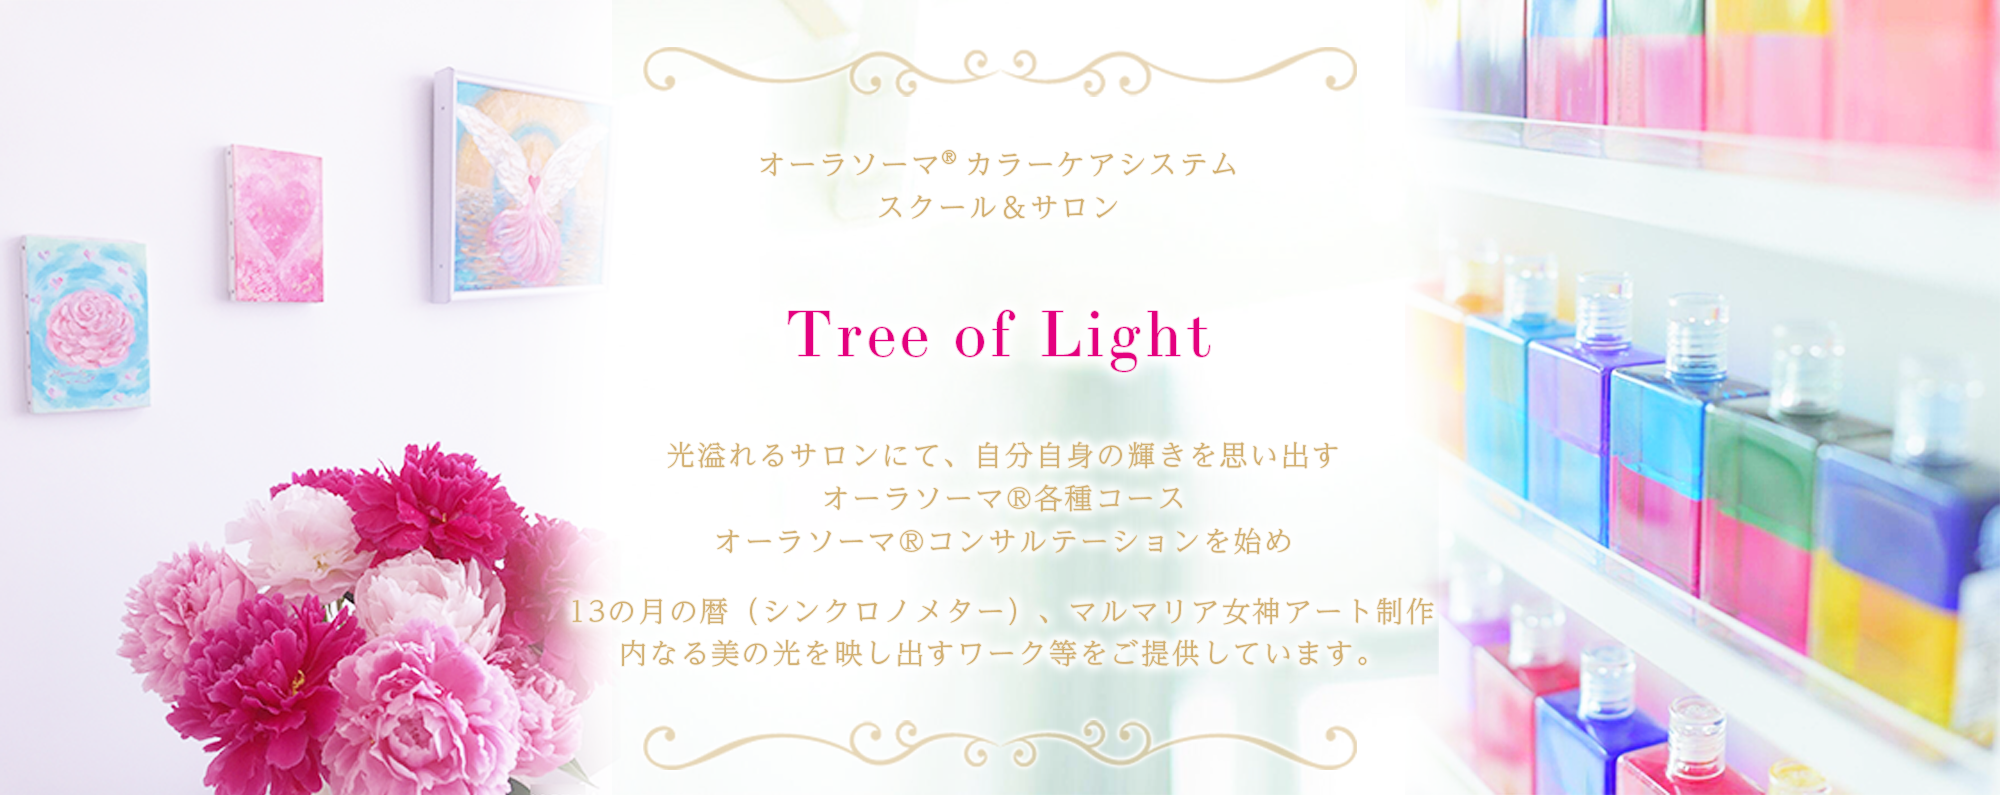 Aura-Soma®Solon♡Tree of Light♡